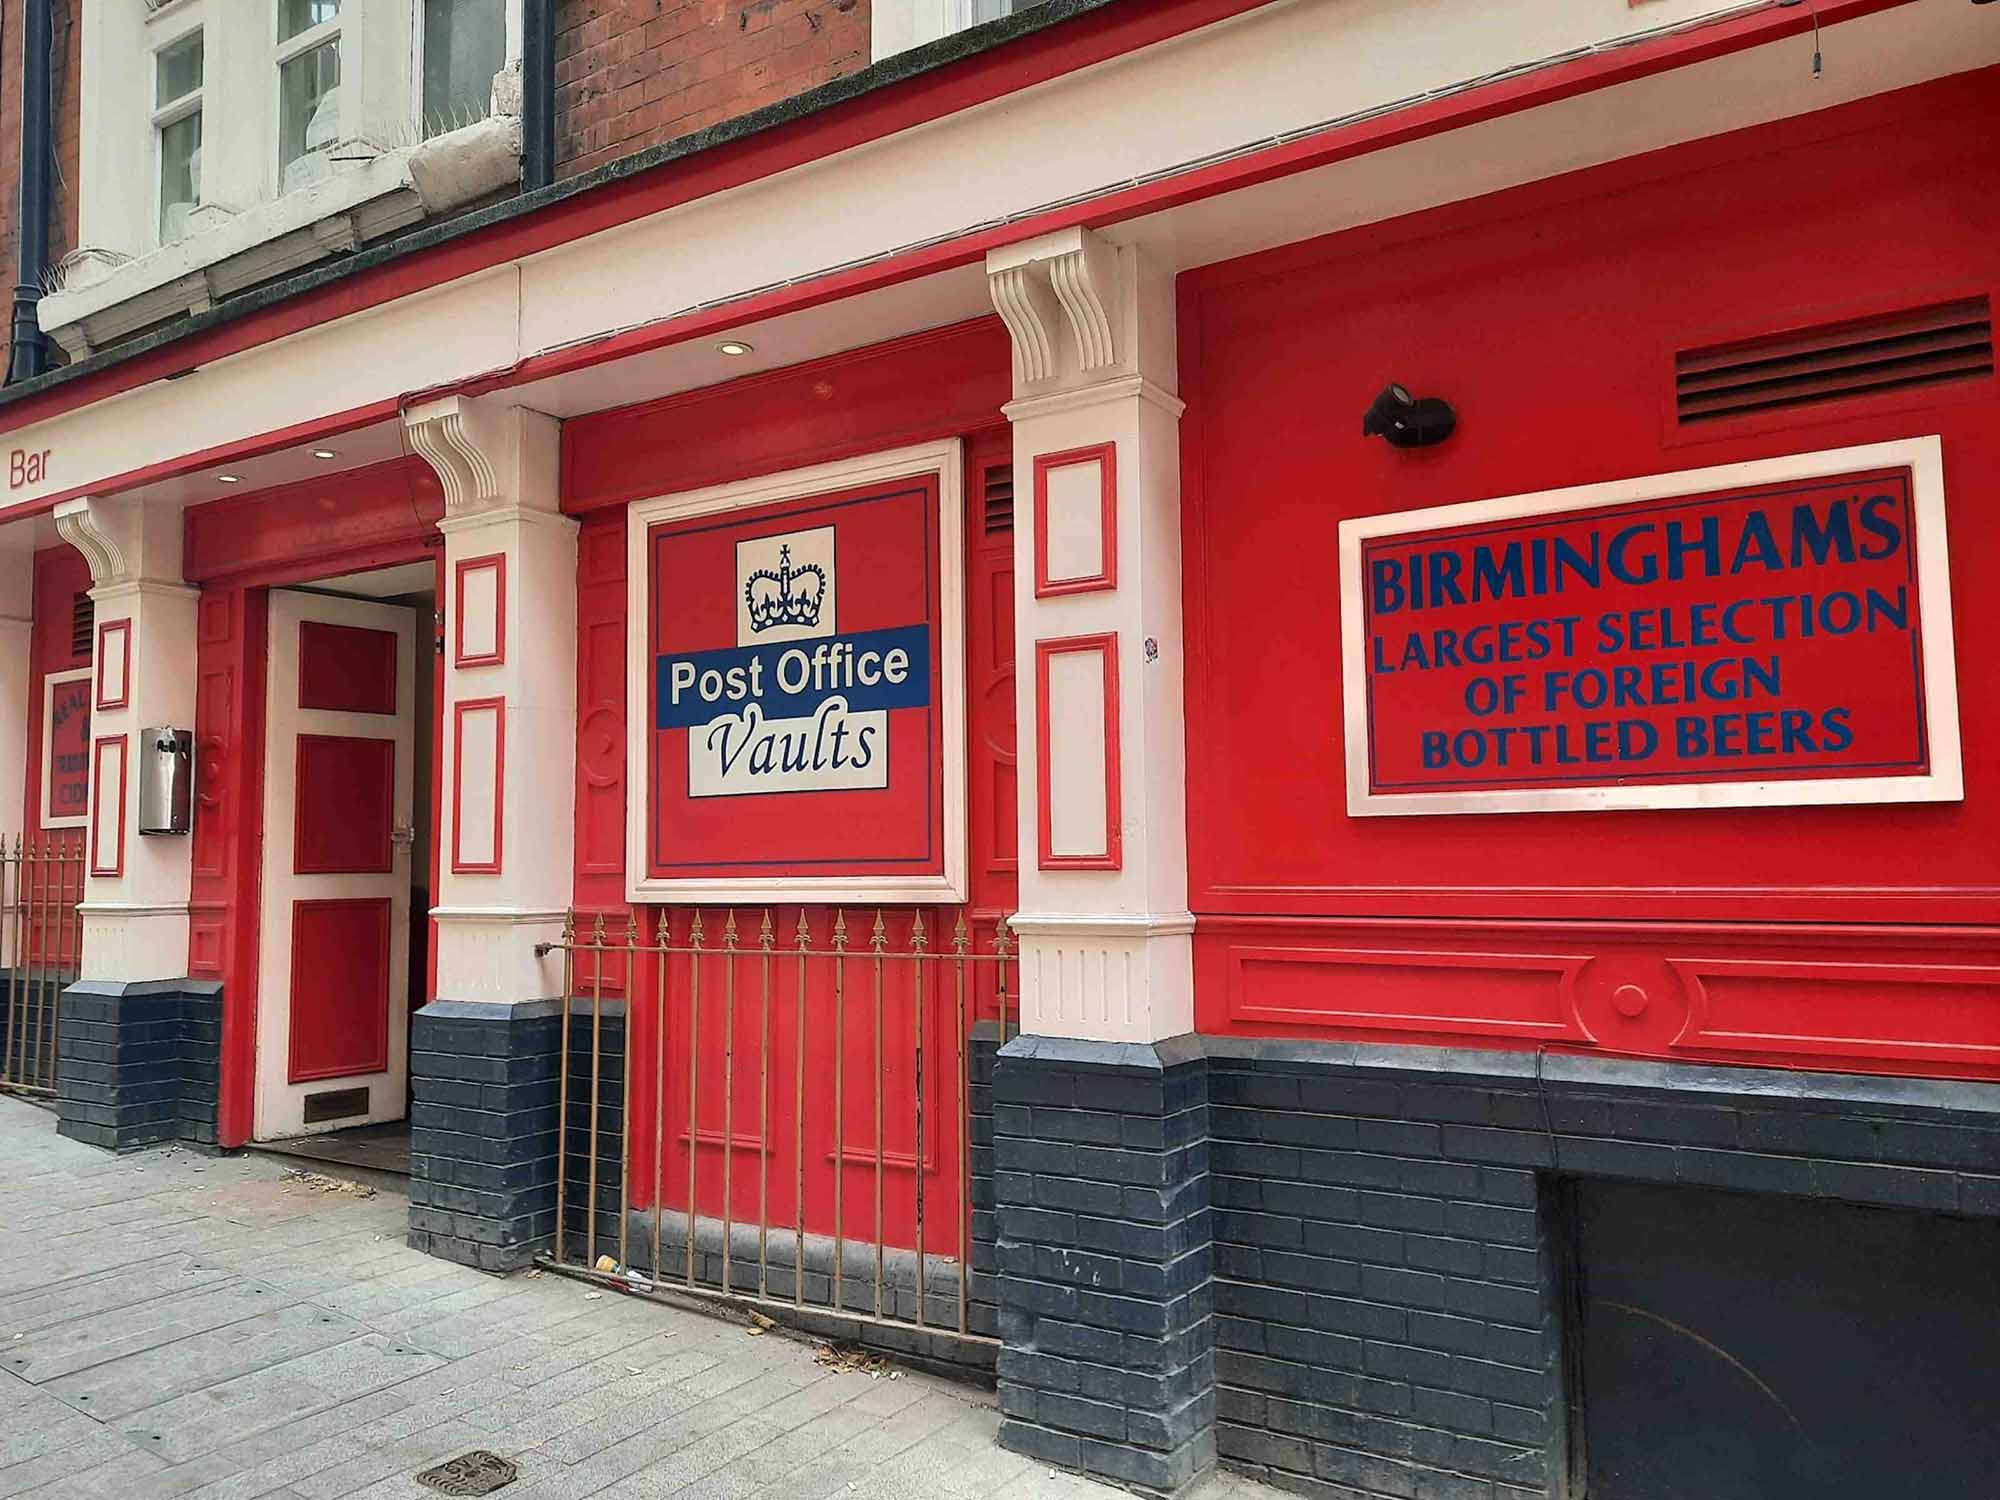 Post Office Vaults - Best Bars in Birmingham